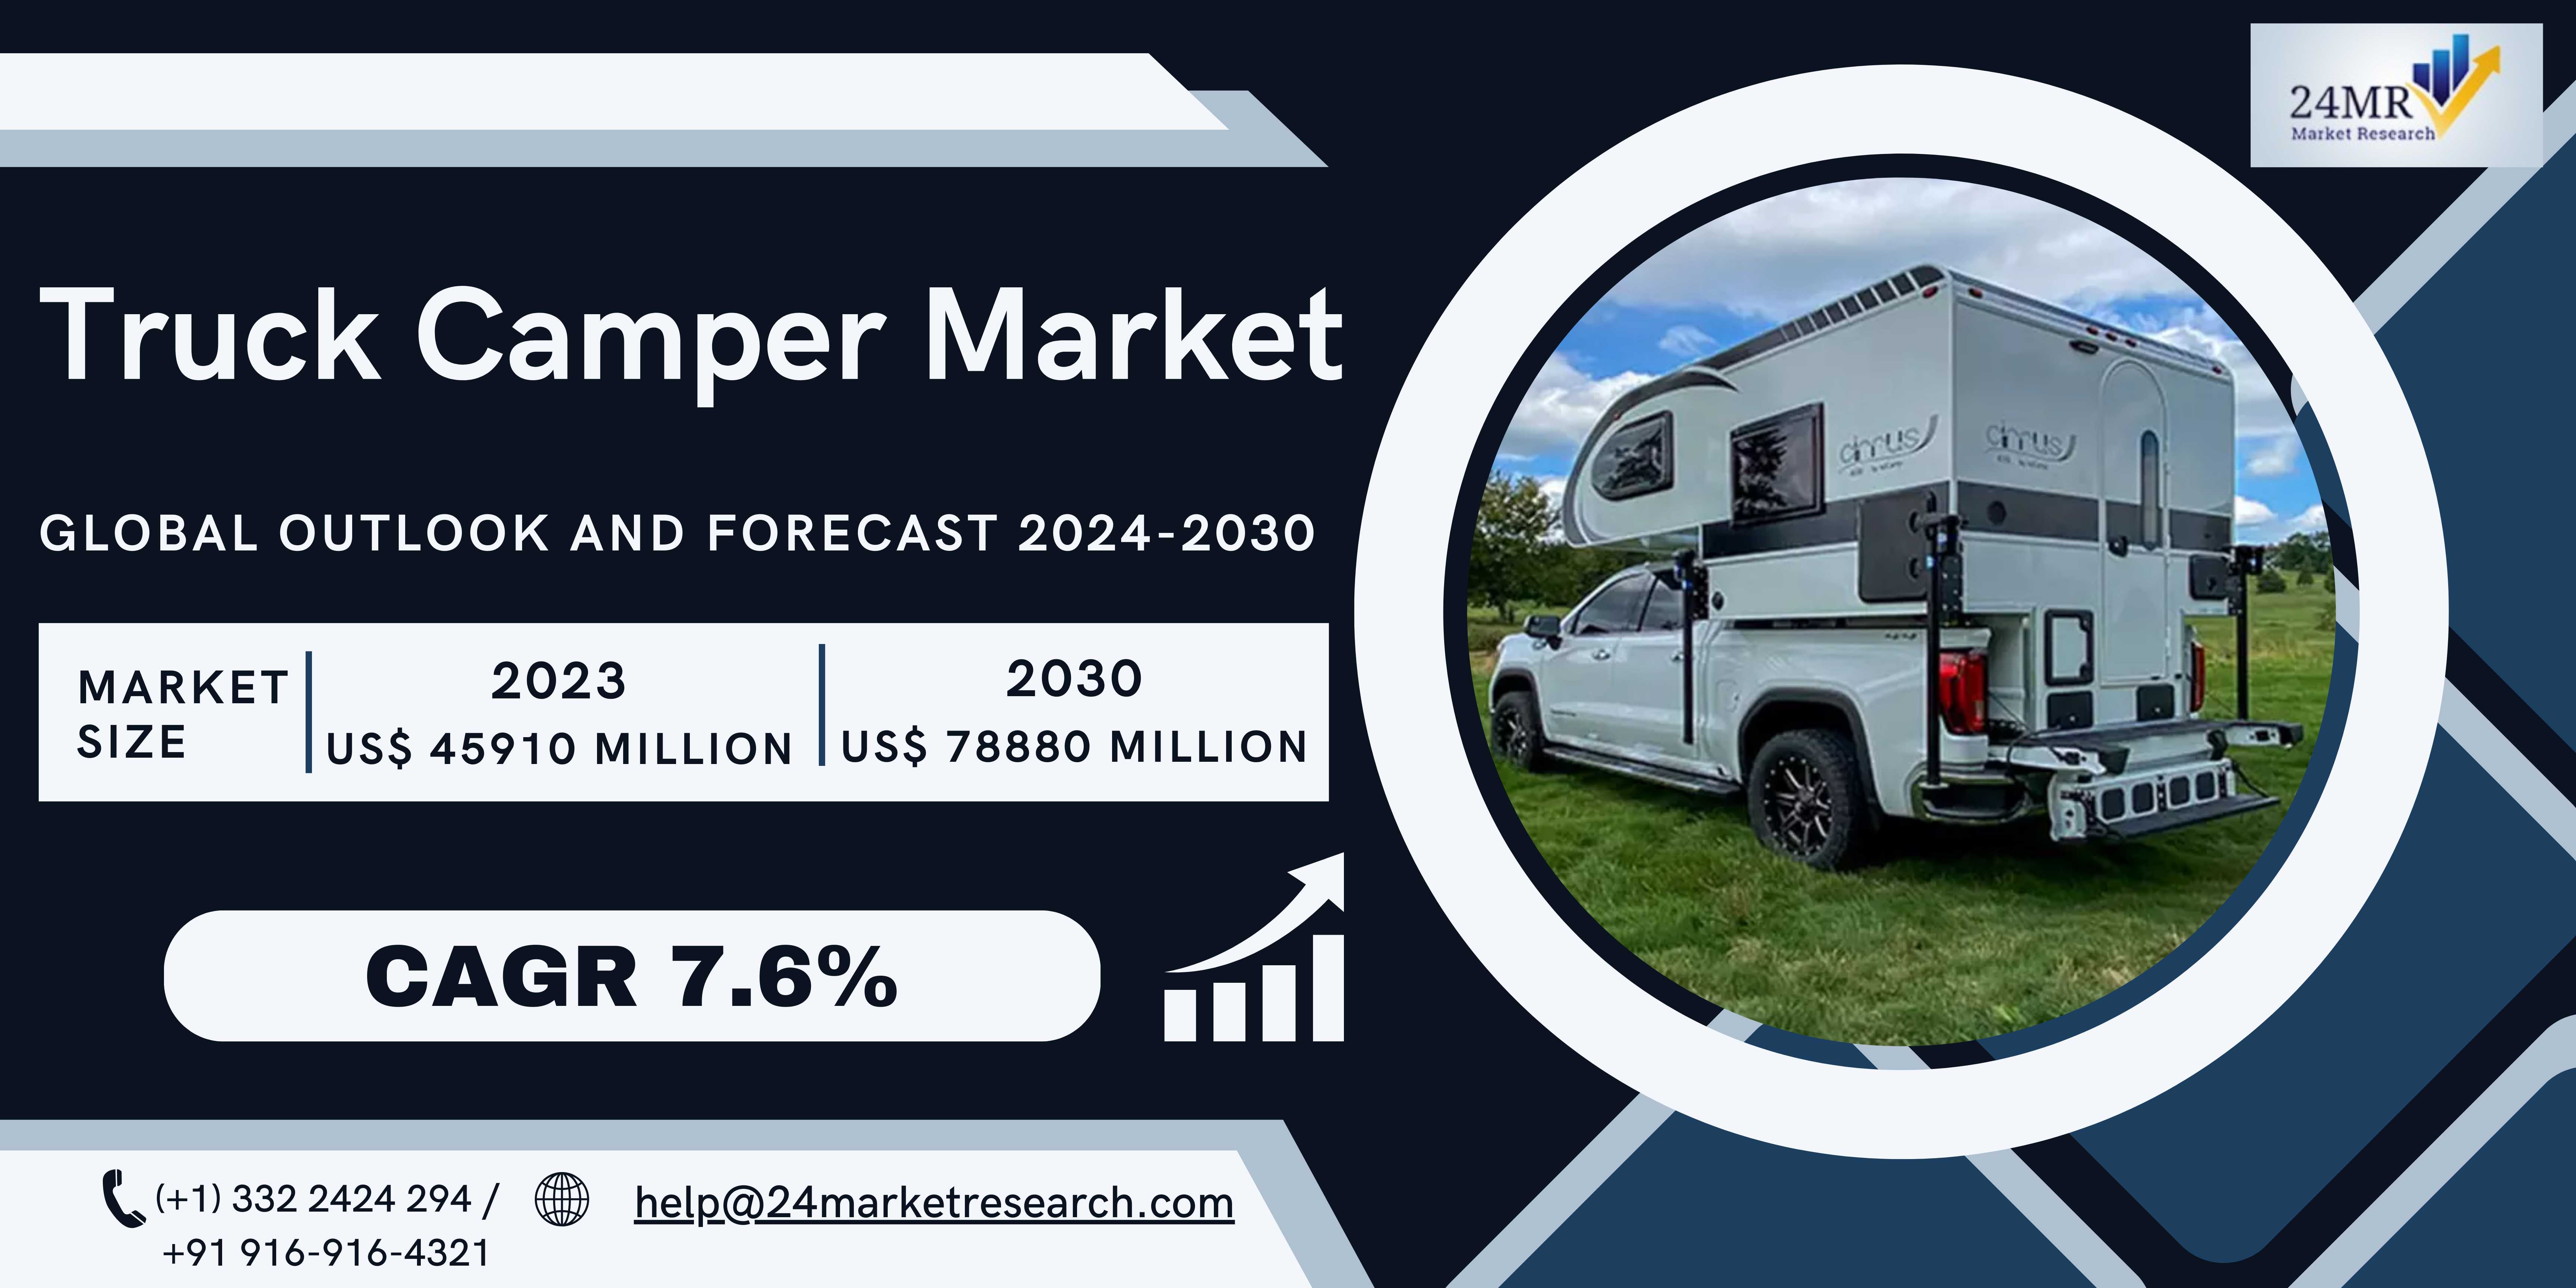 Truck Camper Market, Global Outlook and Forecast 2..